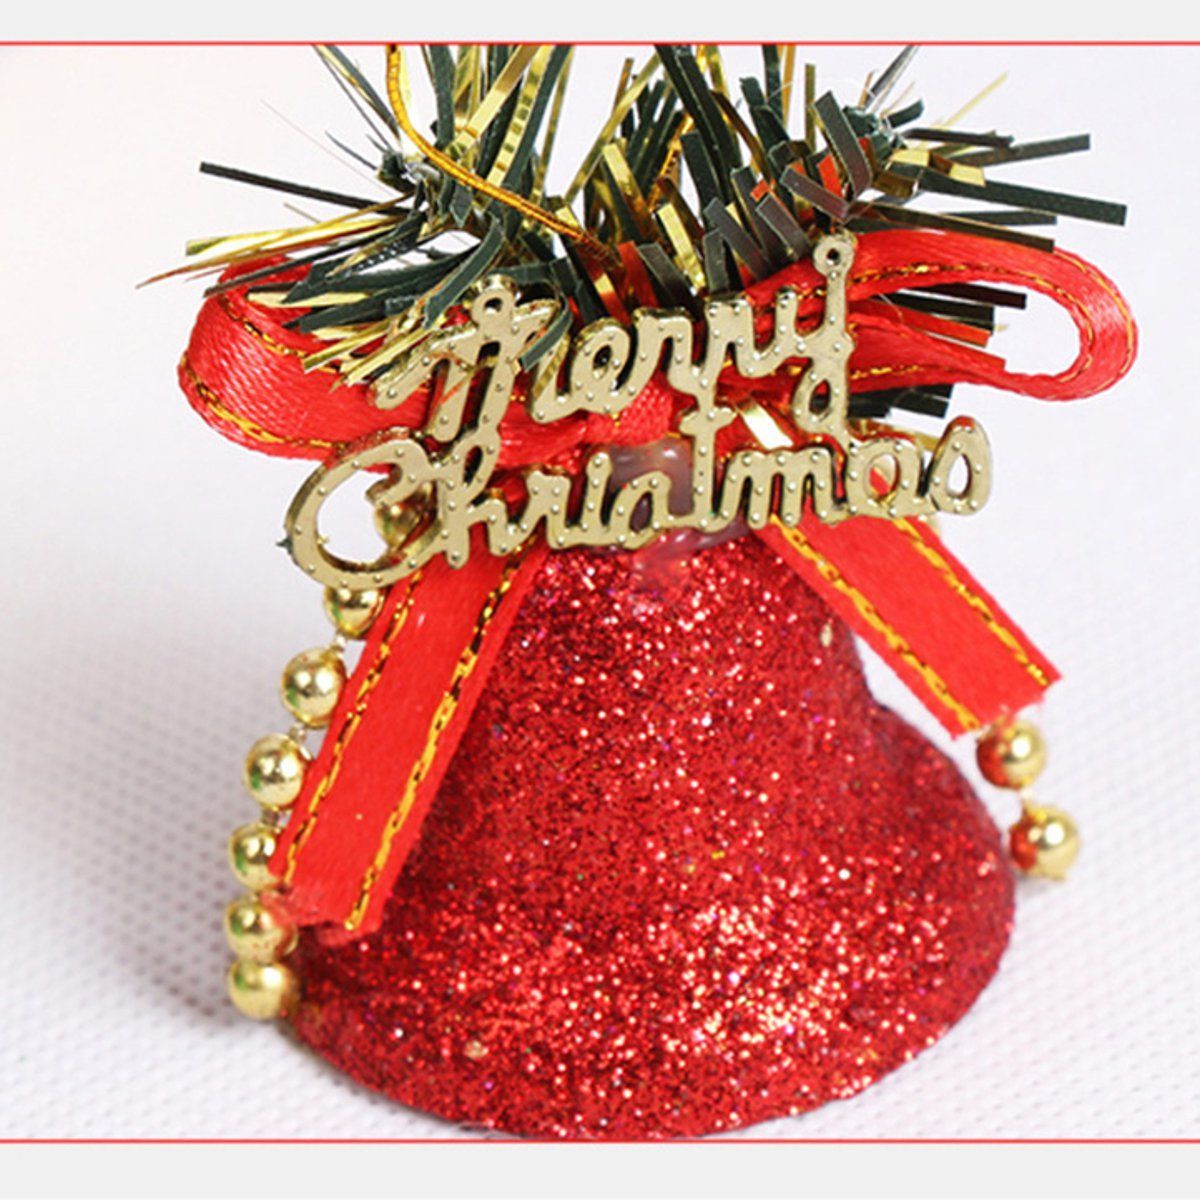 3541cm-6pcs-Christmas-Bells-Christmas-Decoration-Color-Dusted-Plastic-Bells-Christmas-Tree-Accessori-1759753